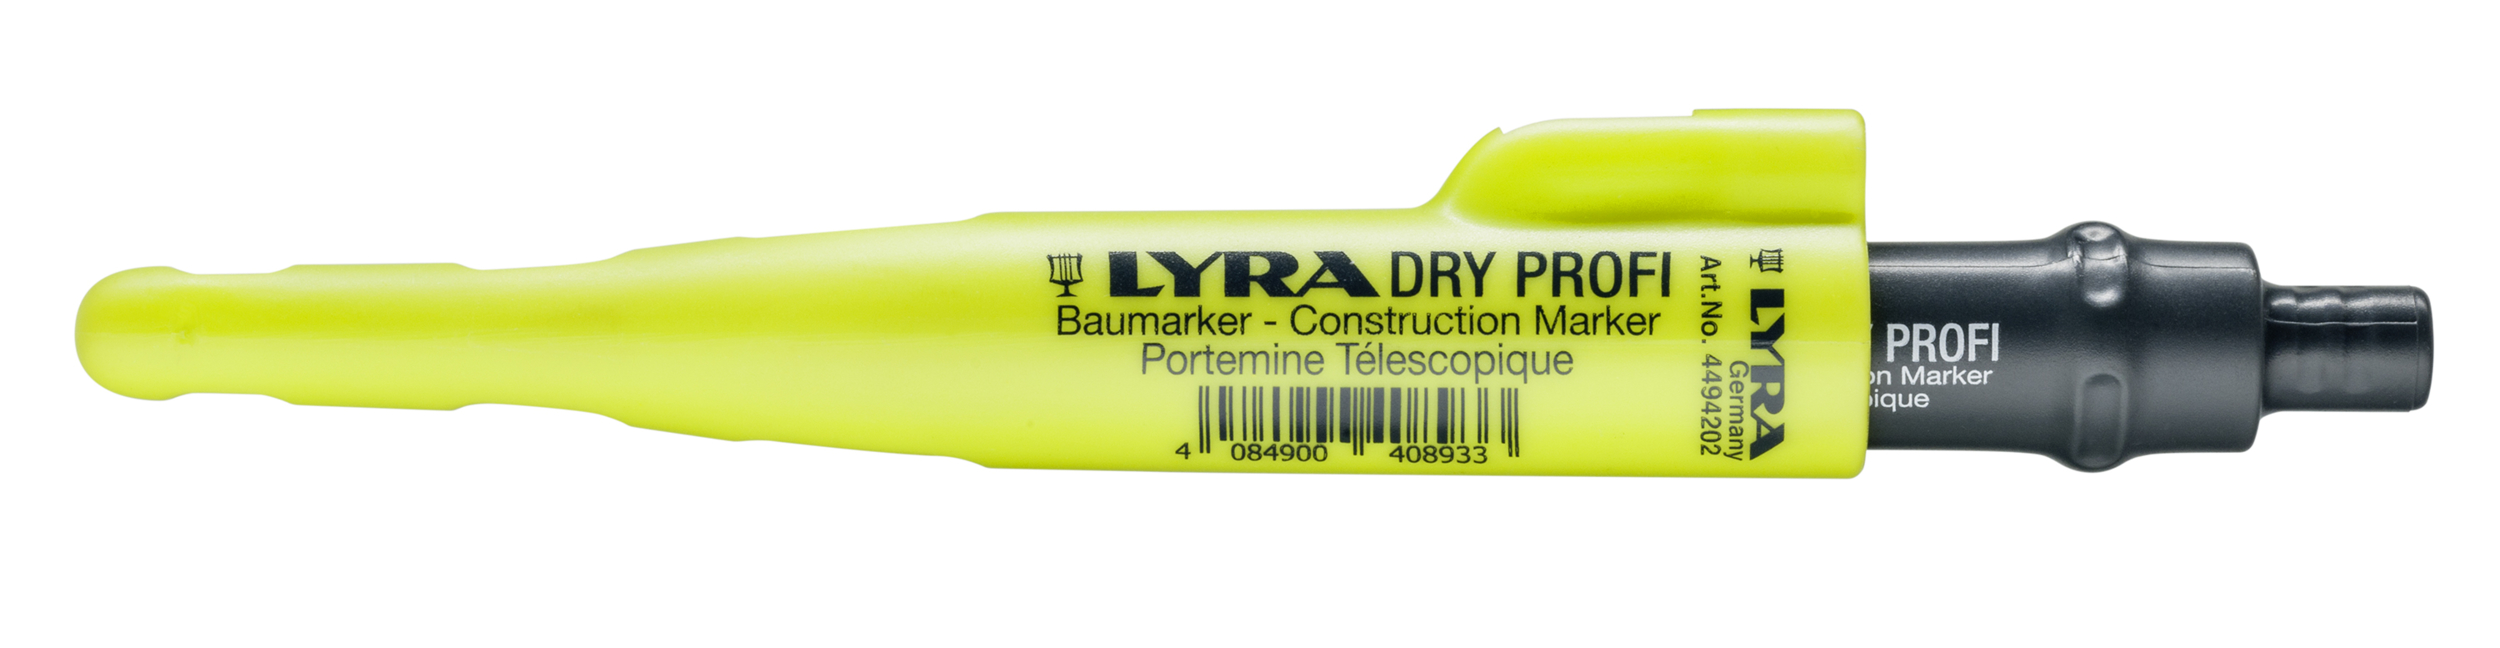 Marqueur de construction LYRA DRY toutes surfaces